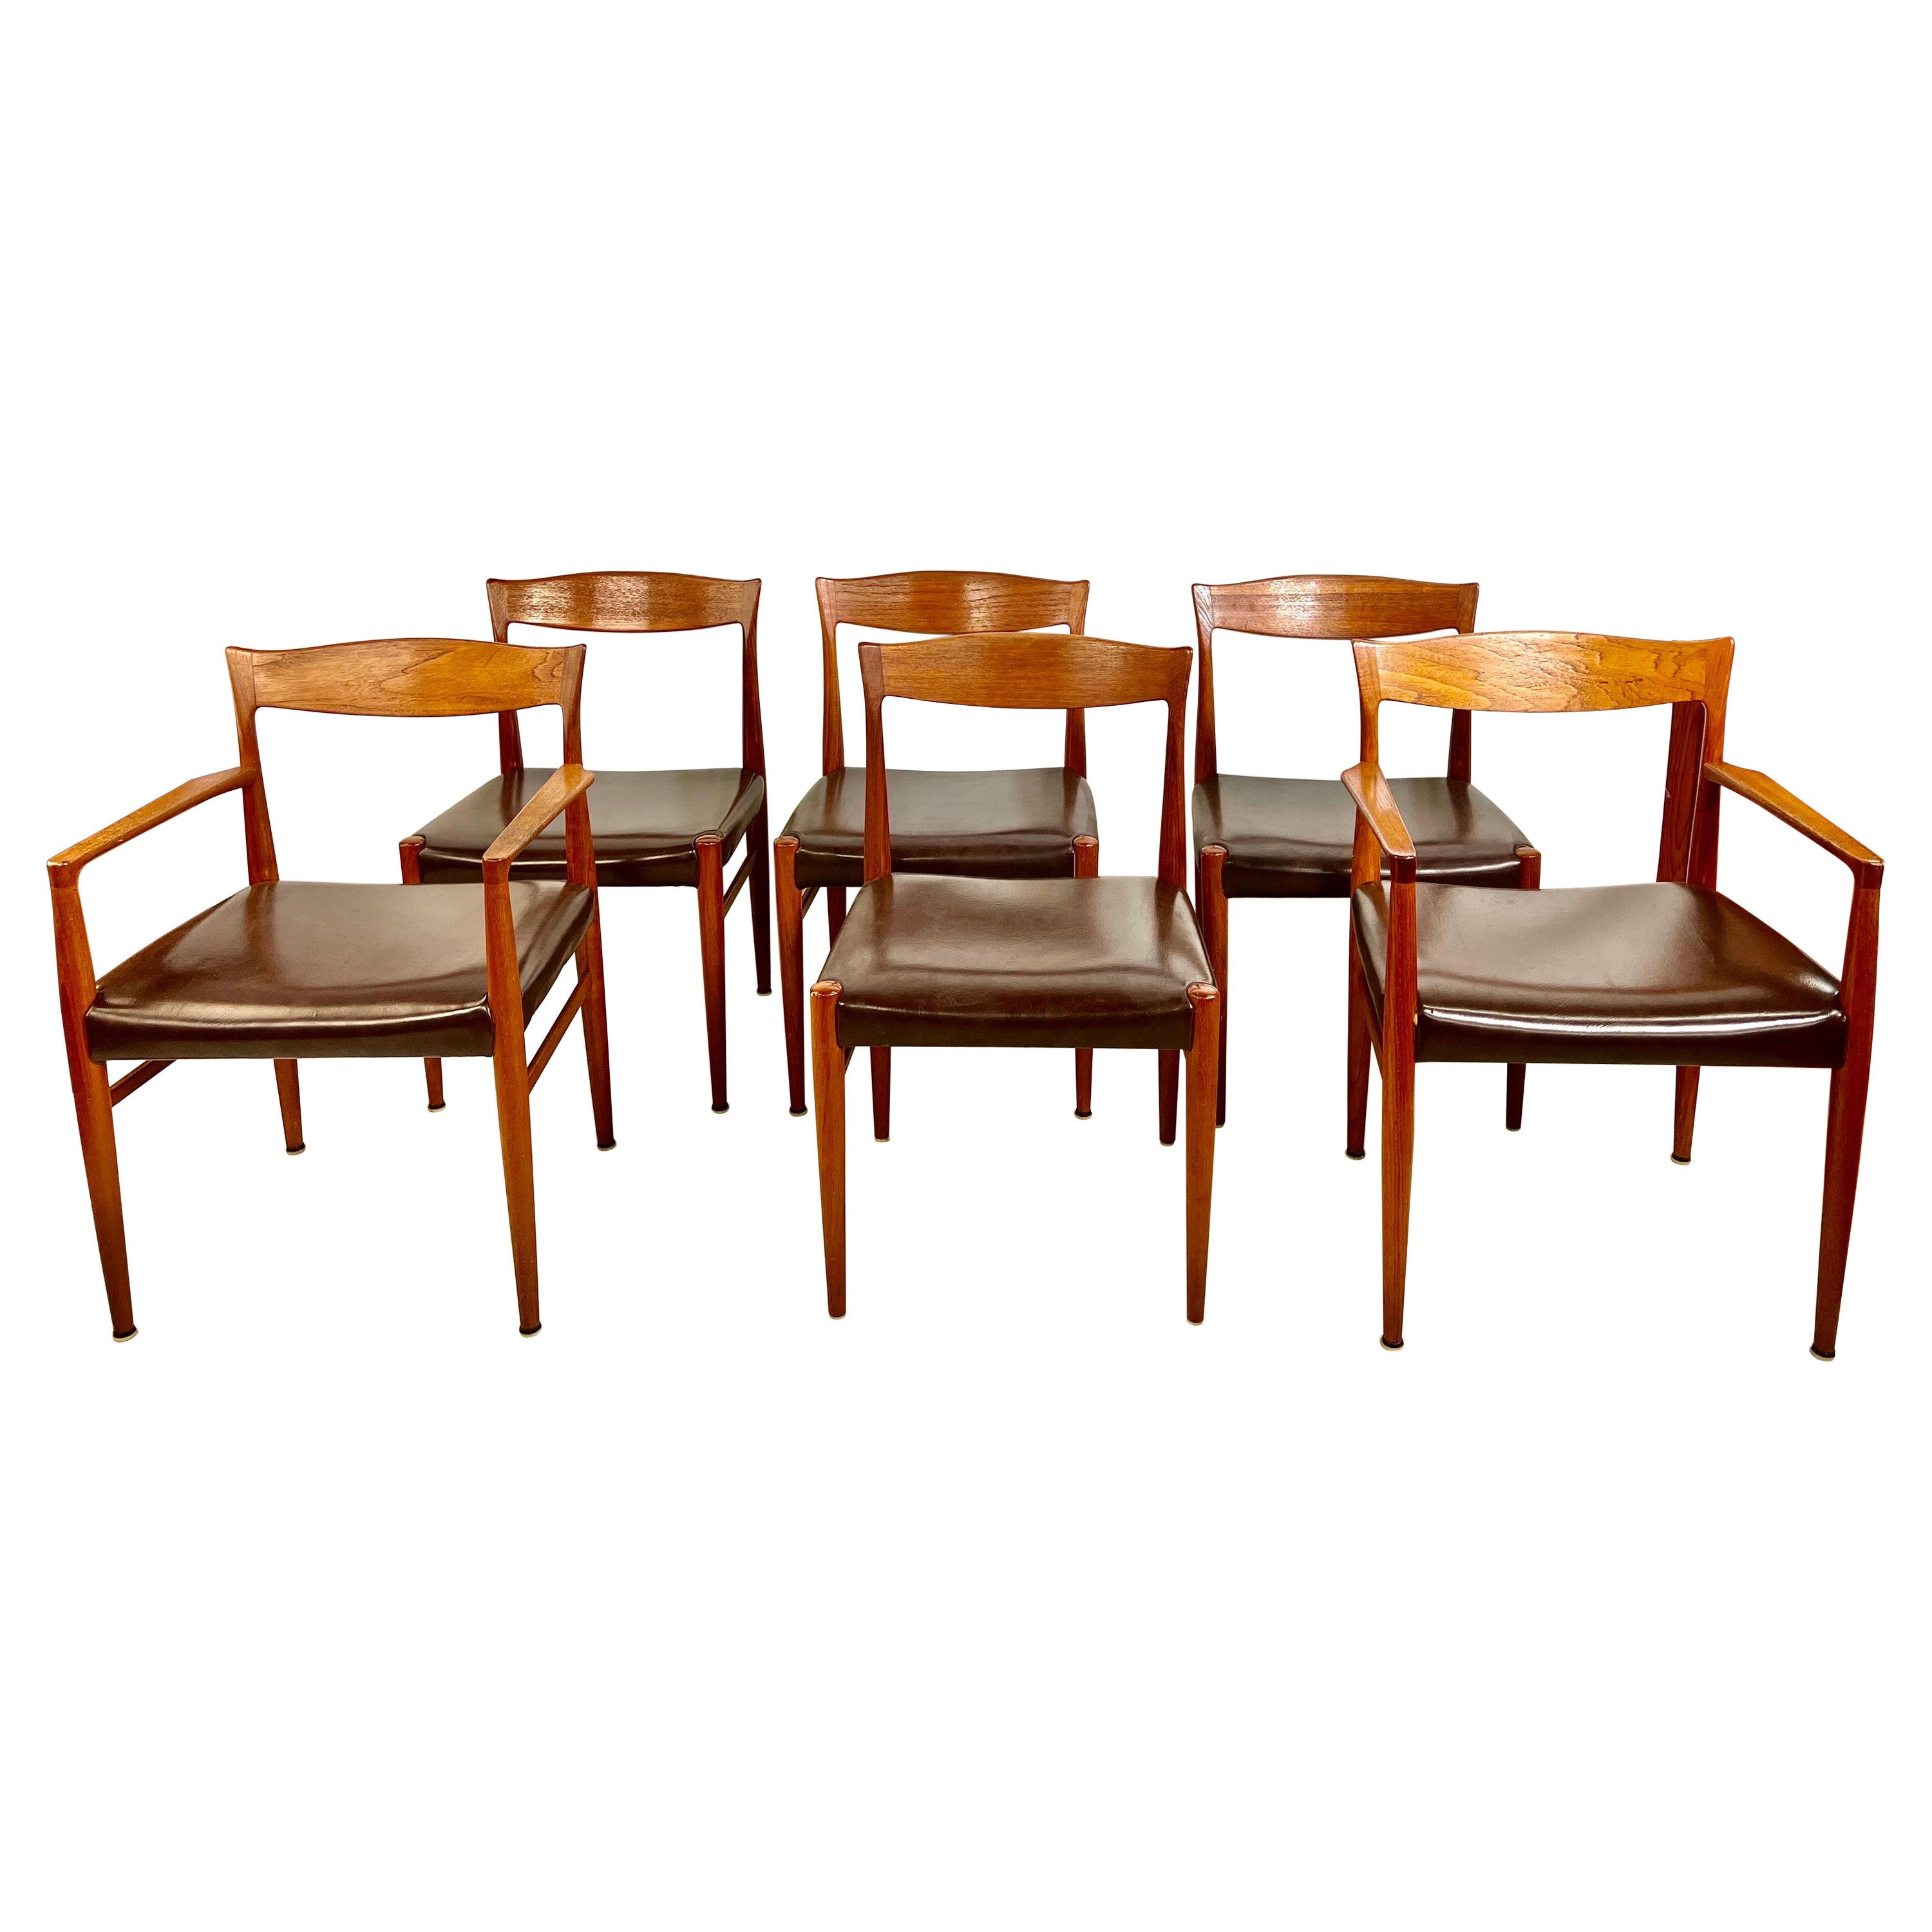 Vintage Danish Teak Sculptural Dining Chairs - a Set of 6 For Sale